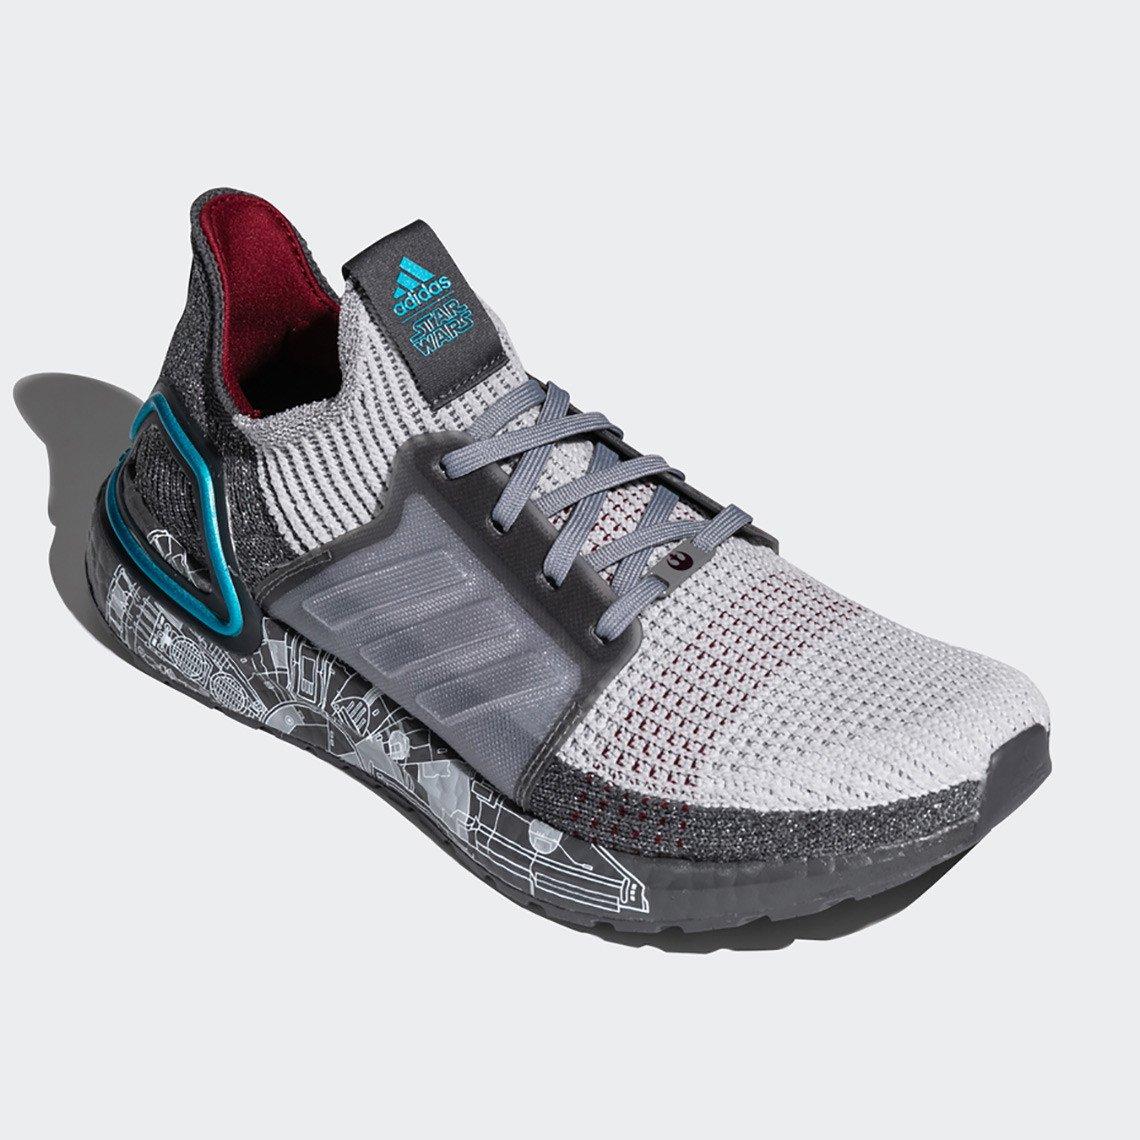 men's adidas x star wars ultraboost 19 running shoes